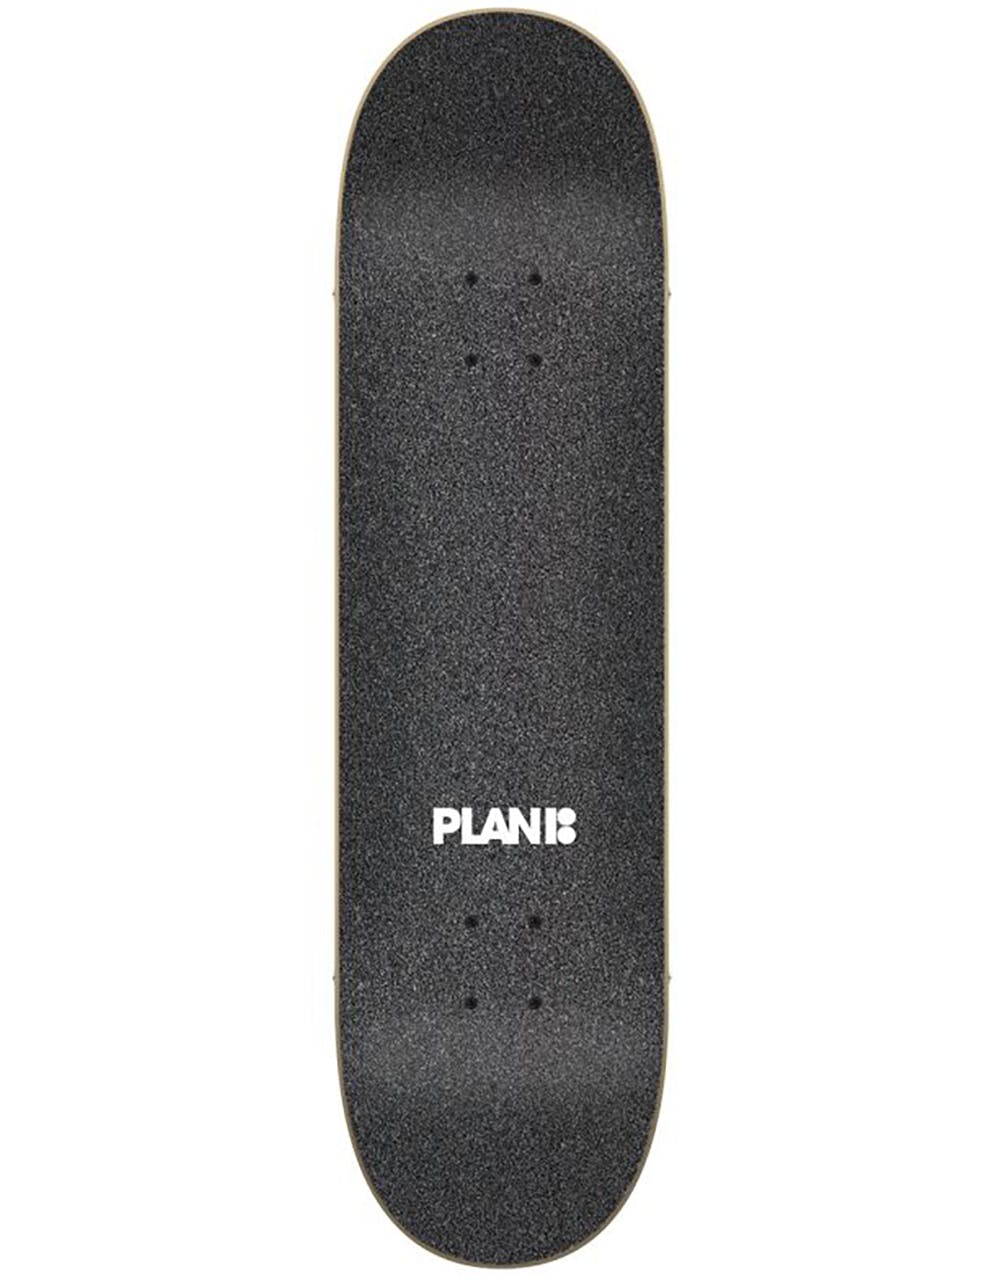 Plan B Team Shine Complete Skateboard - 8"